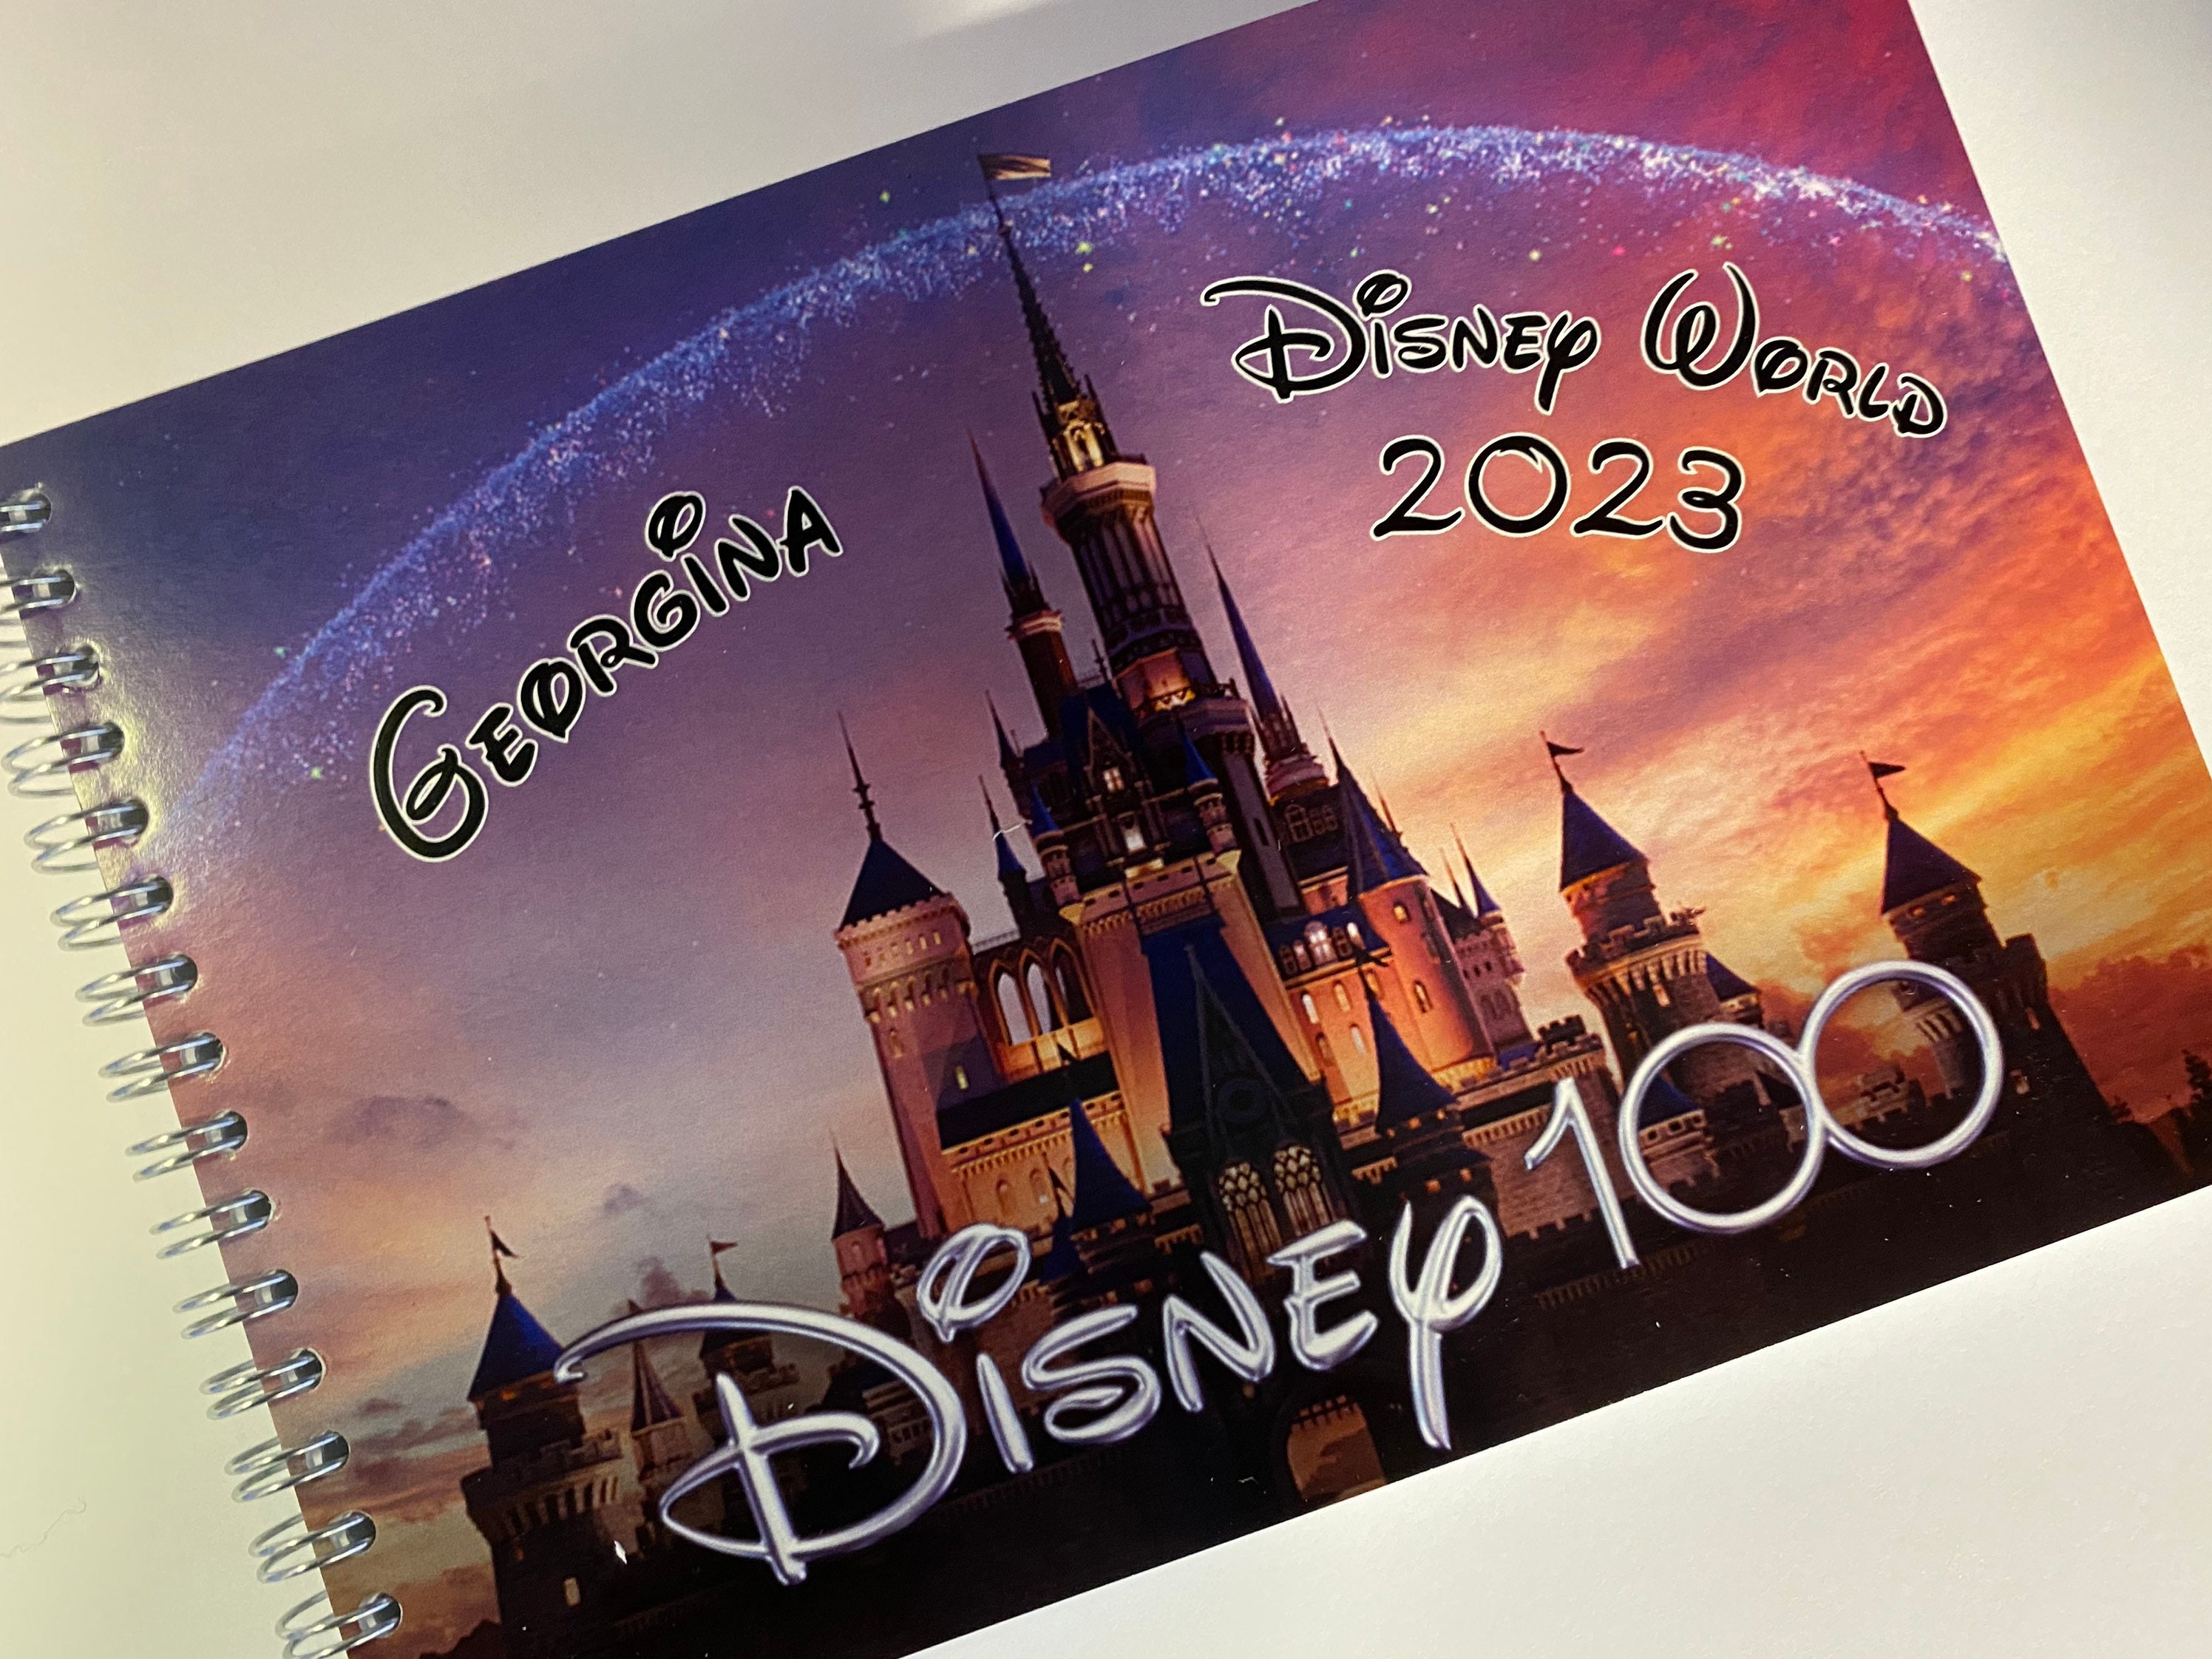 Libro de autógrafos personalizado de Disneyland París